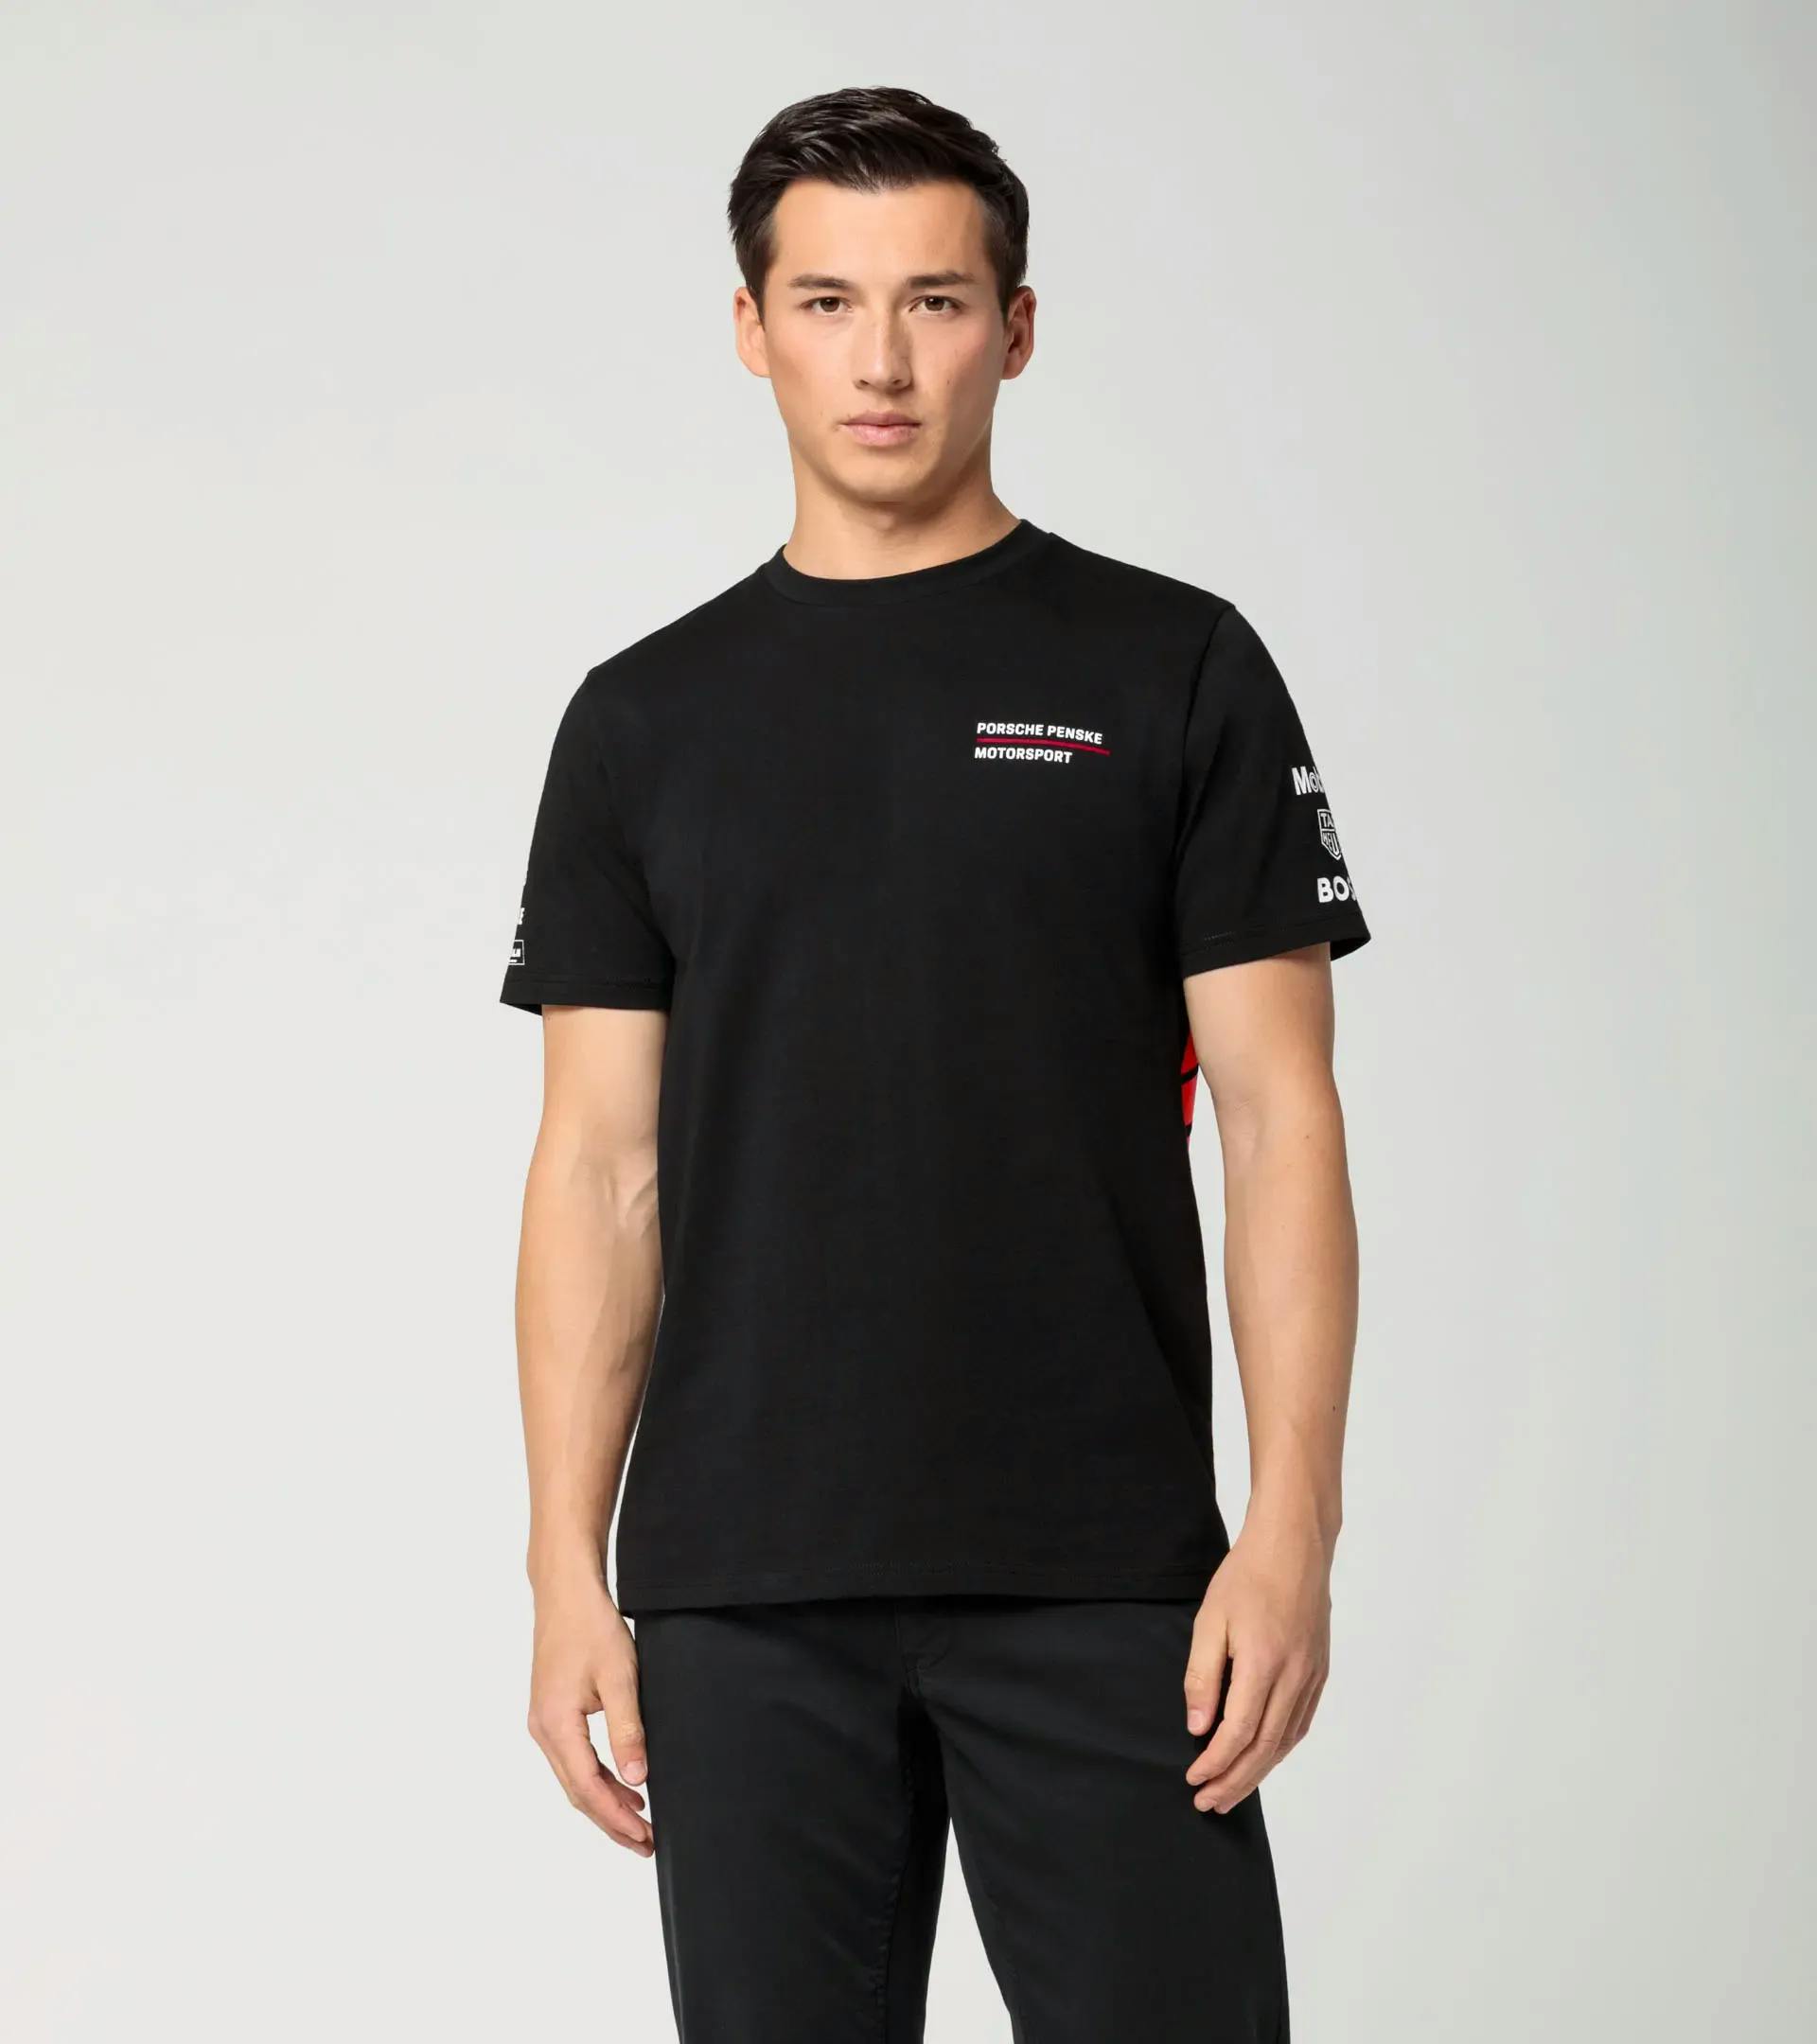 T-shirt unisexe – Porsche Penske Motorsport 5